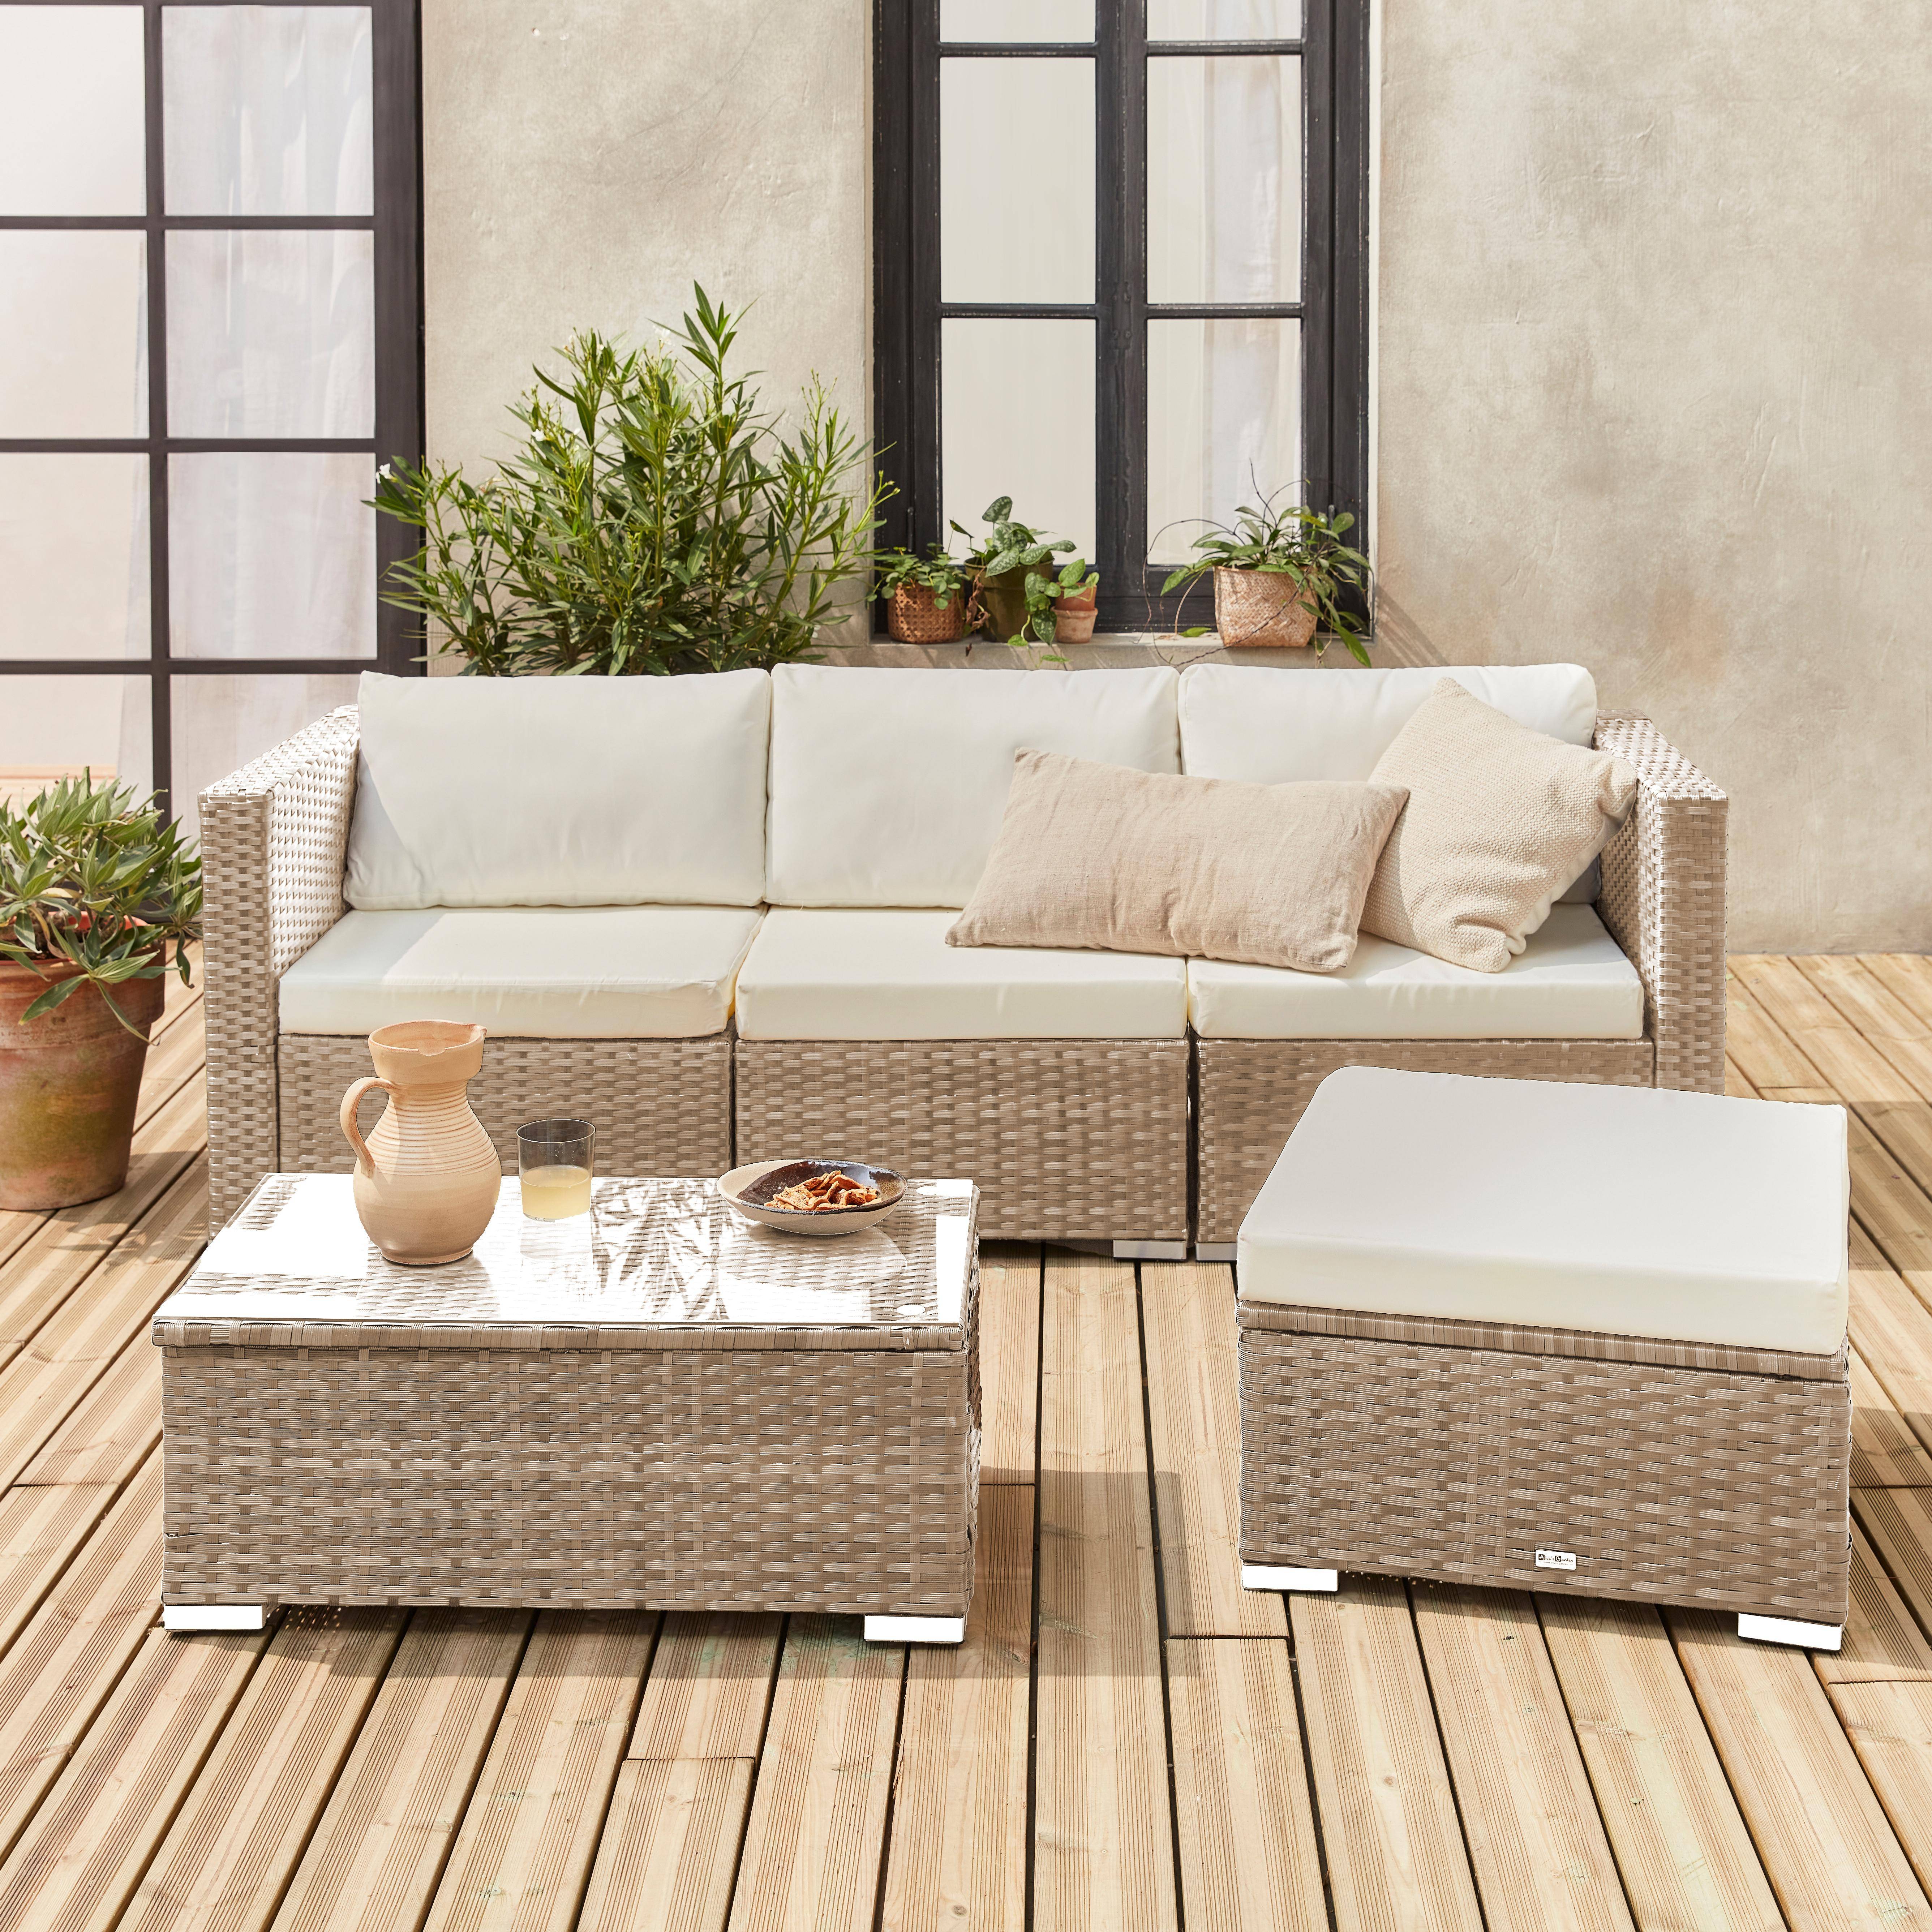 4-seater rattan garden sofa set - sofa, footrest, coffee table - Torino - Beige,sweeek,Photo1